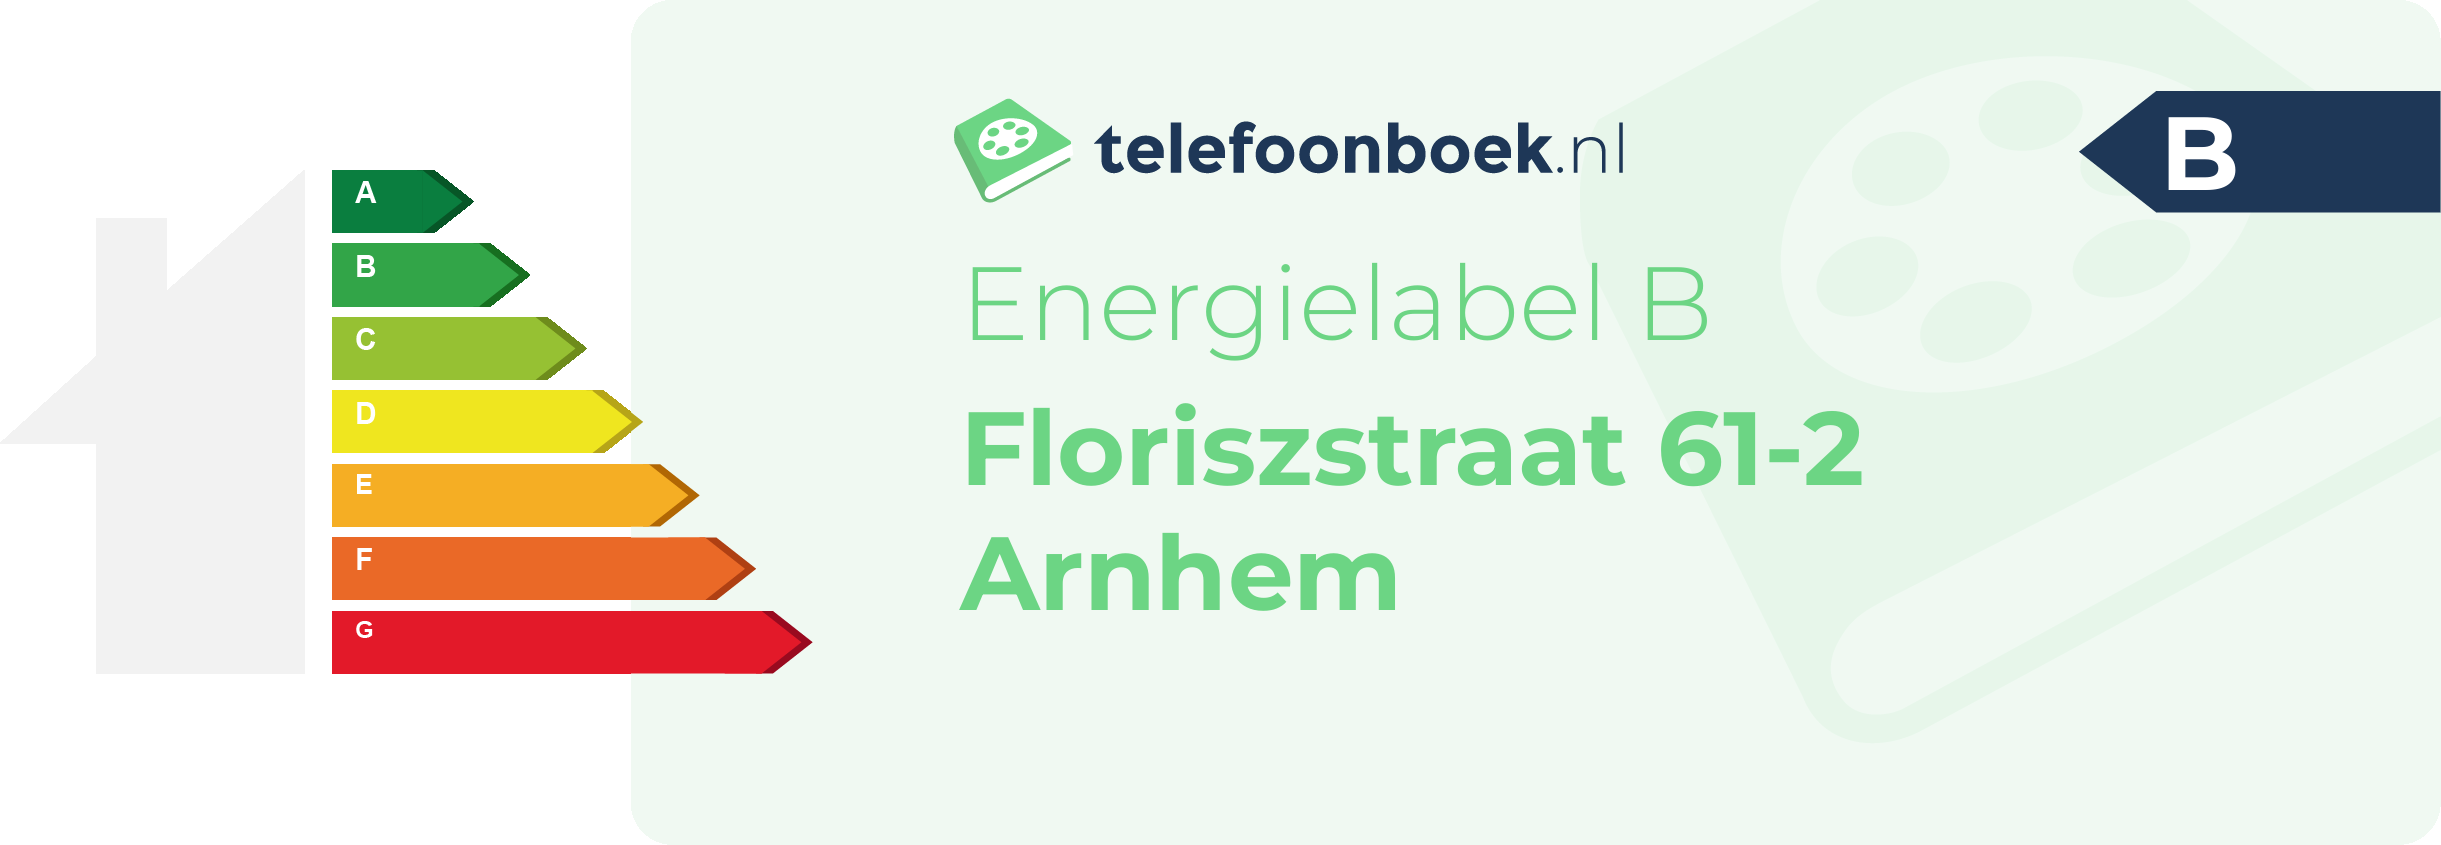 Energielabel Floriszstraat 61-2 Arnhem